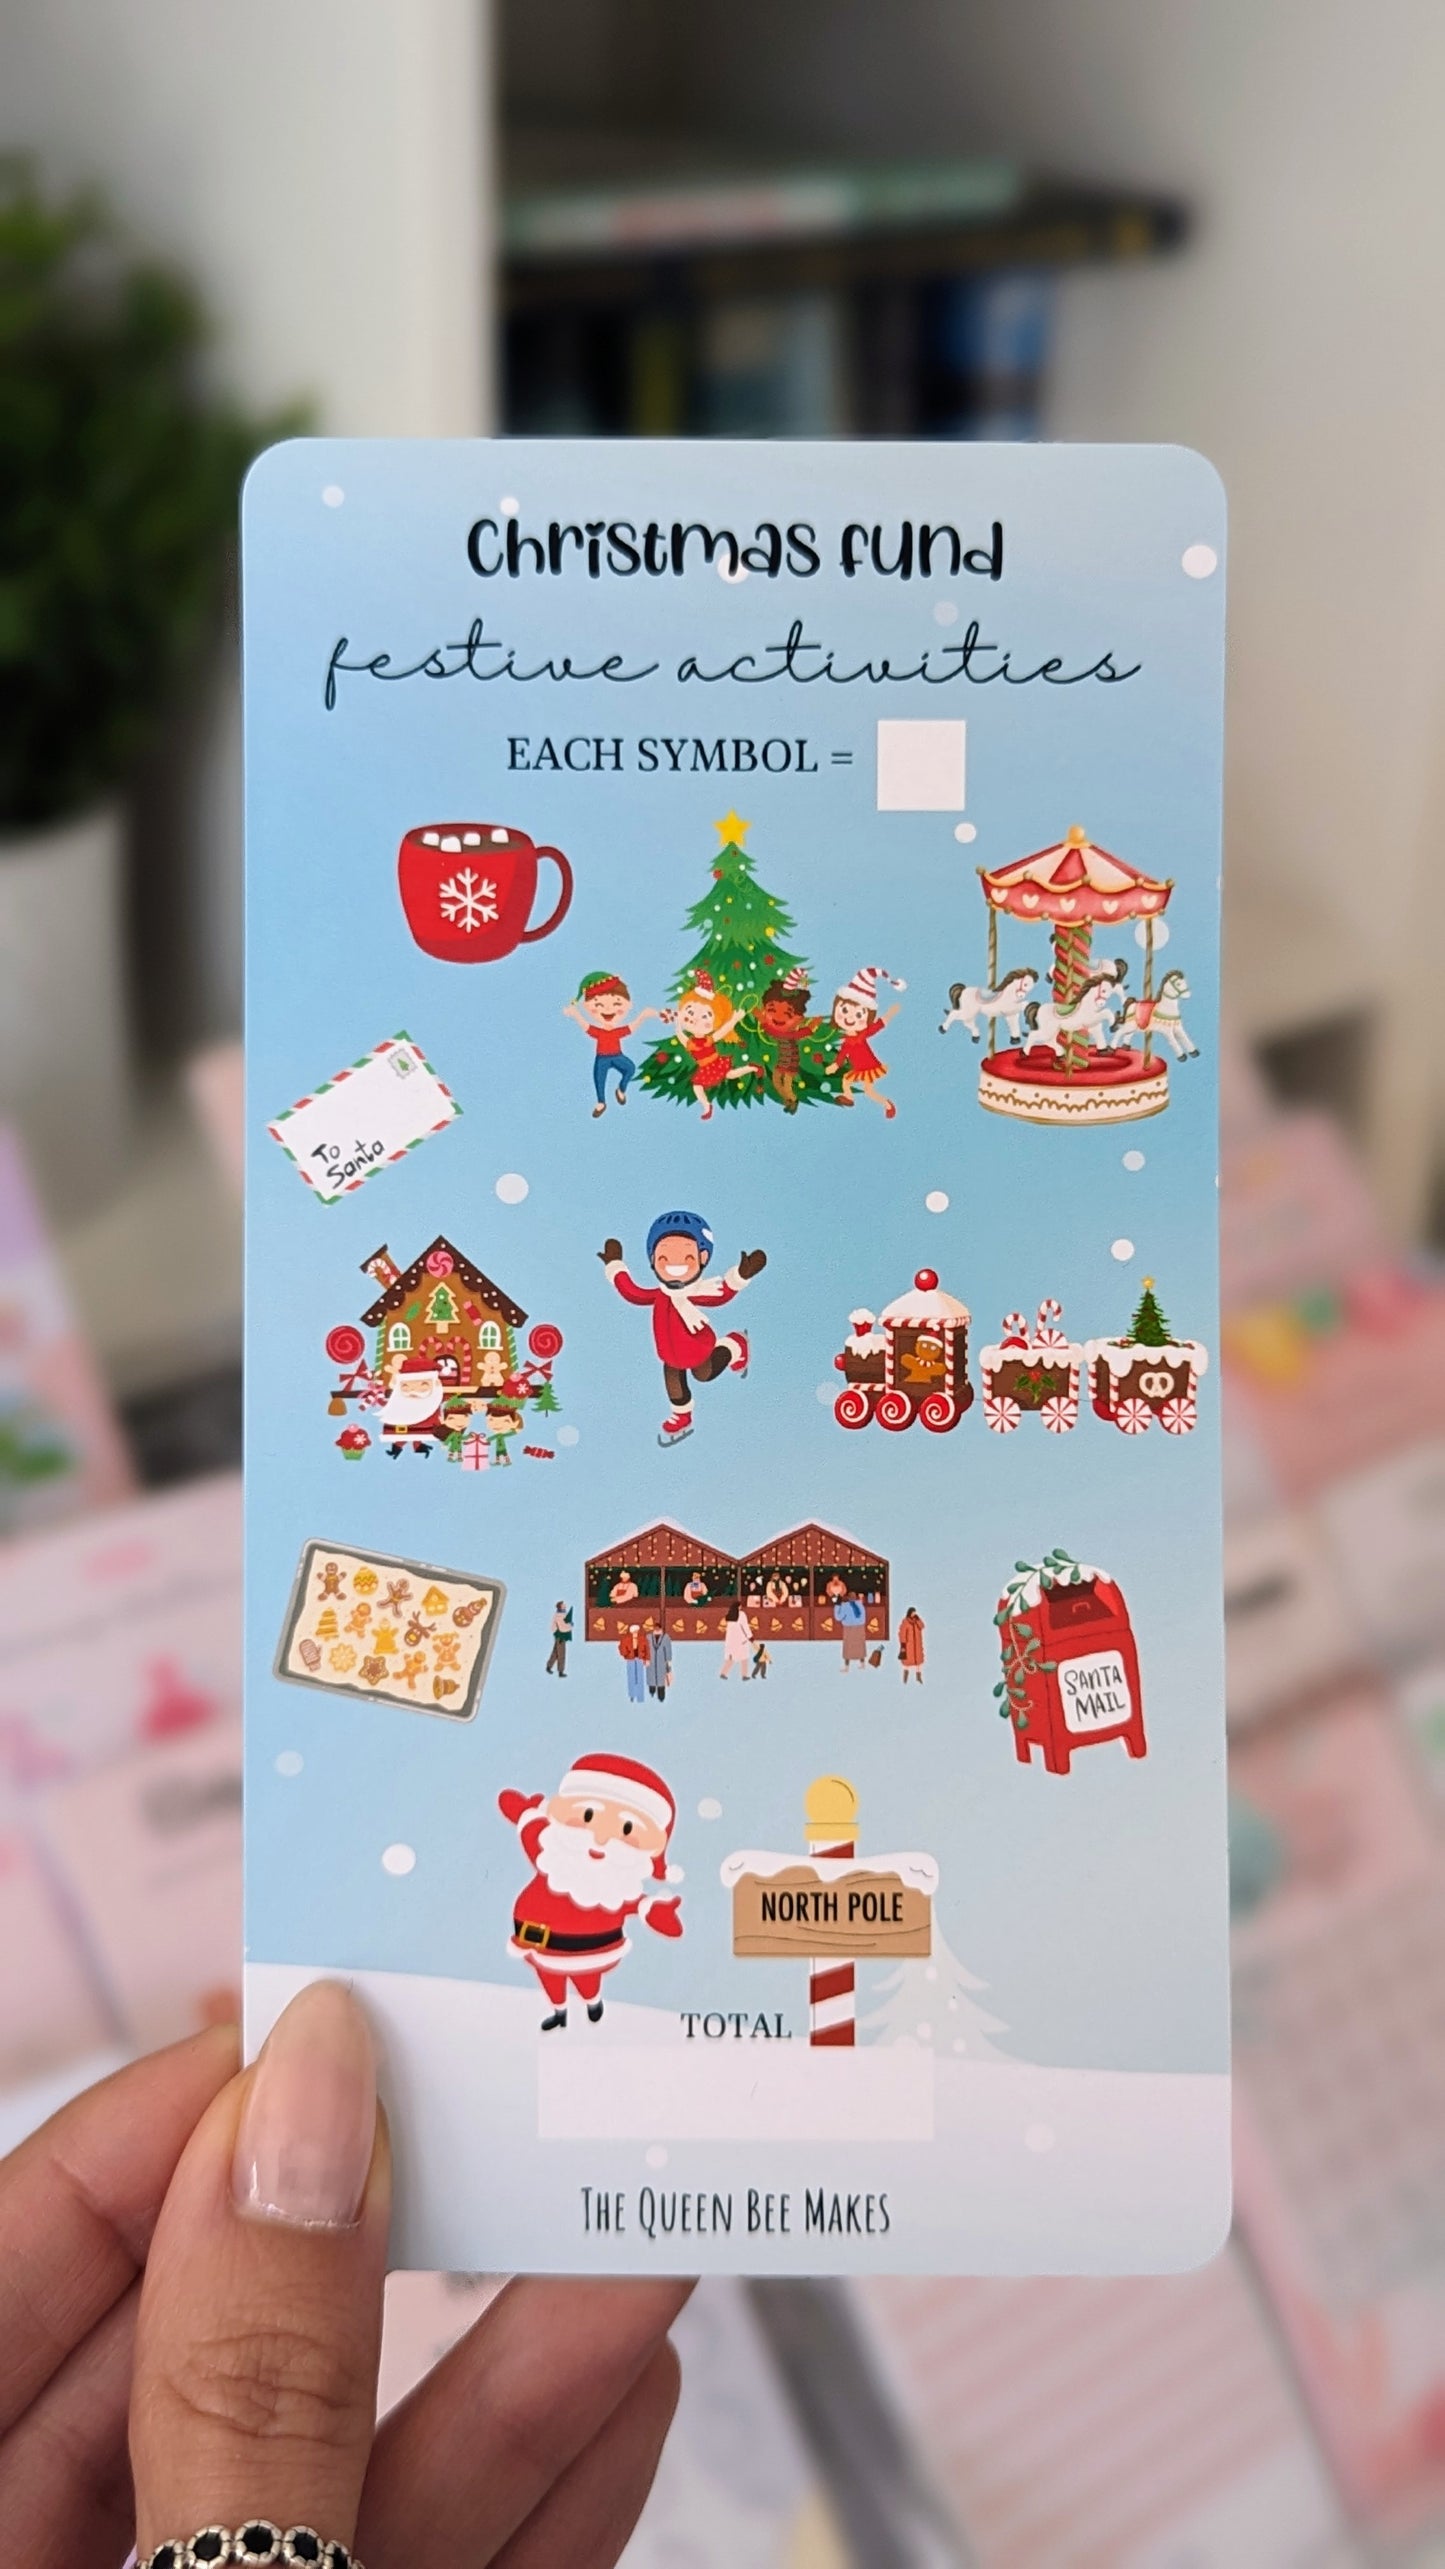 Christmas Fund - Festive Activities/ Money Saving Tracker